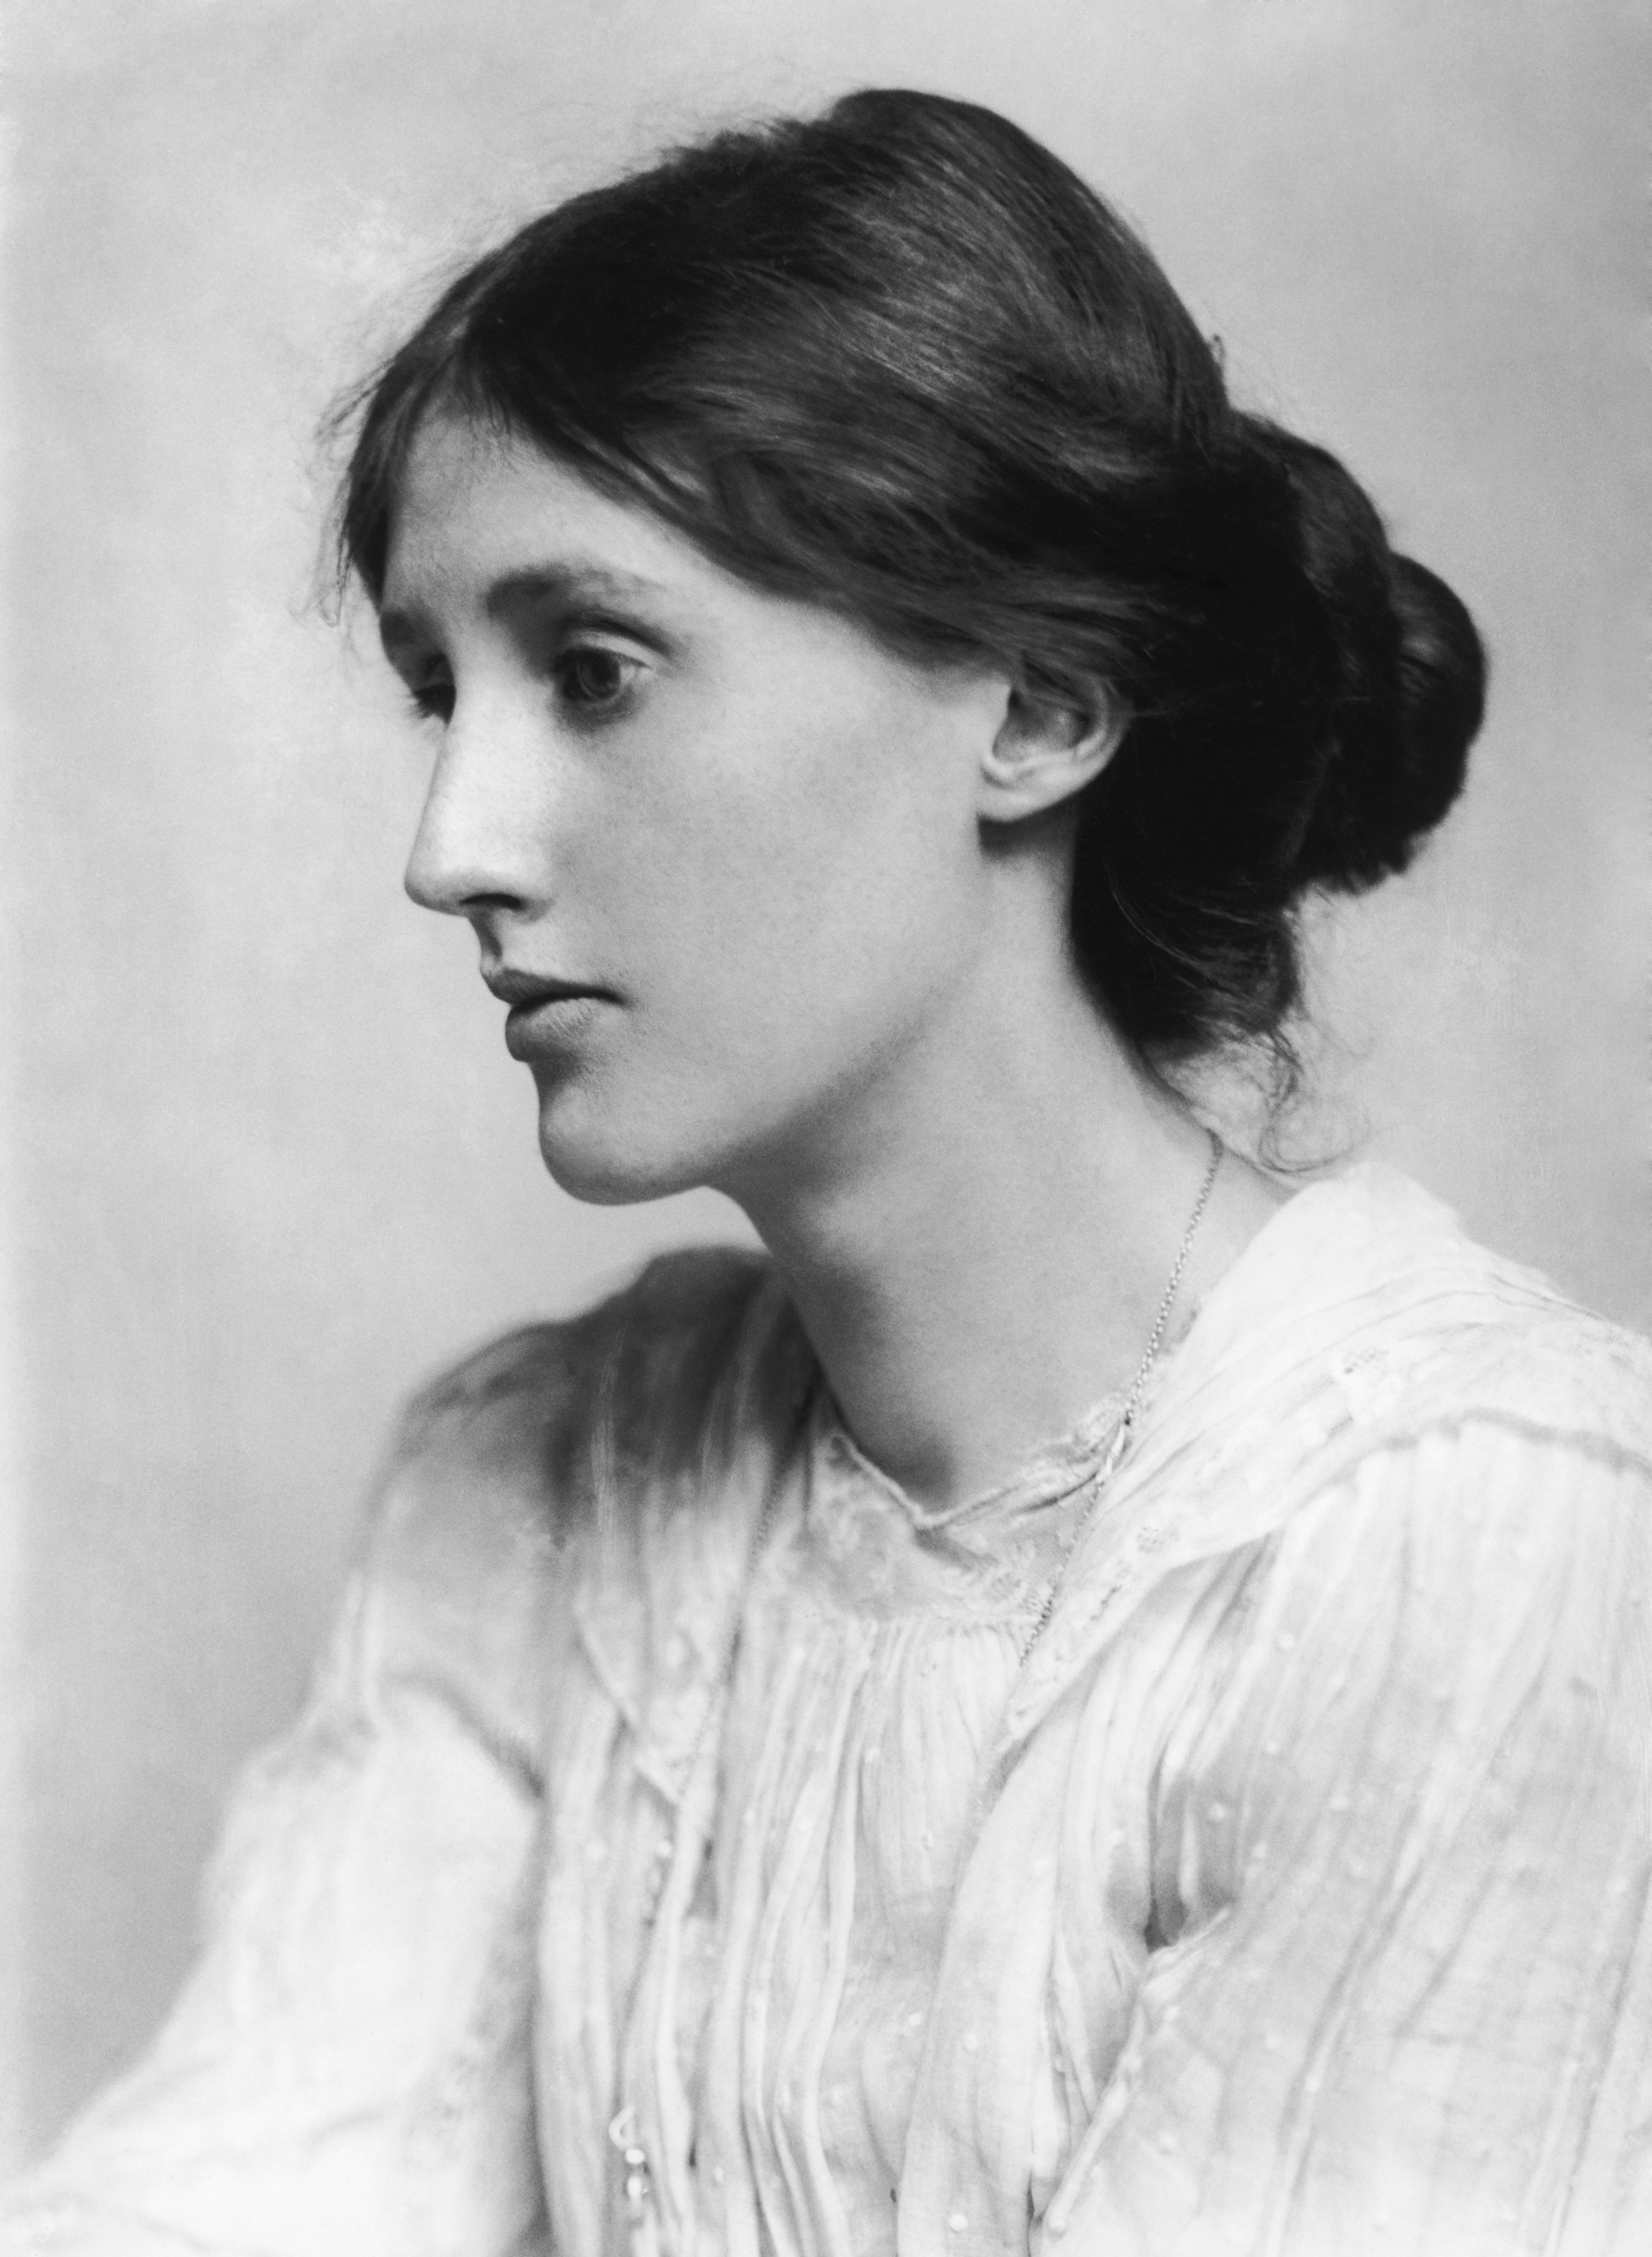 Virginia Woolf - Falt i det fri (Public domain)